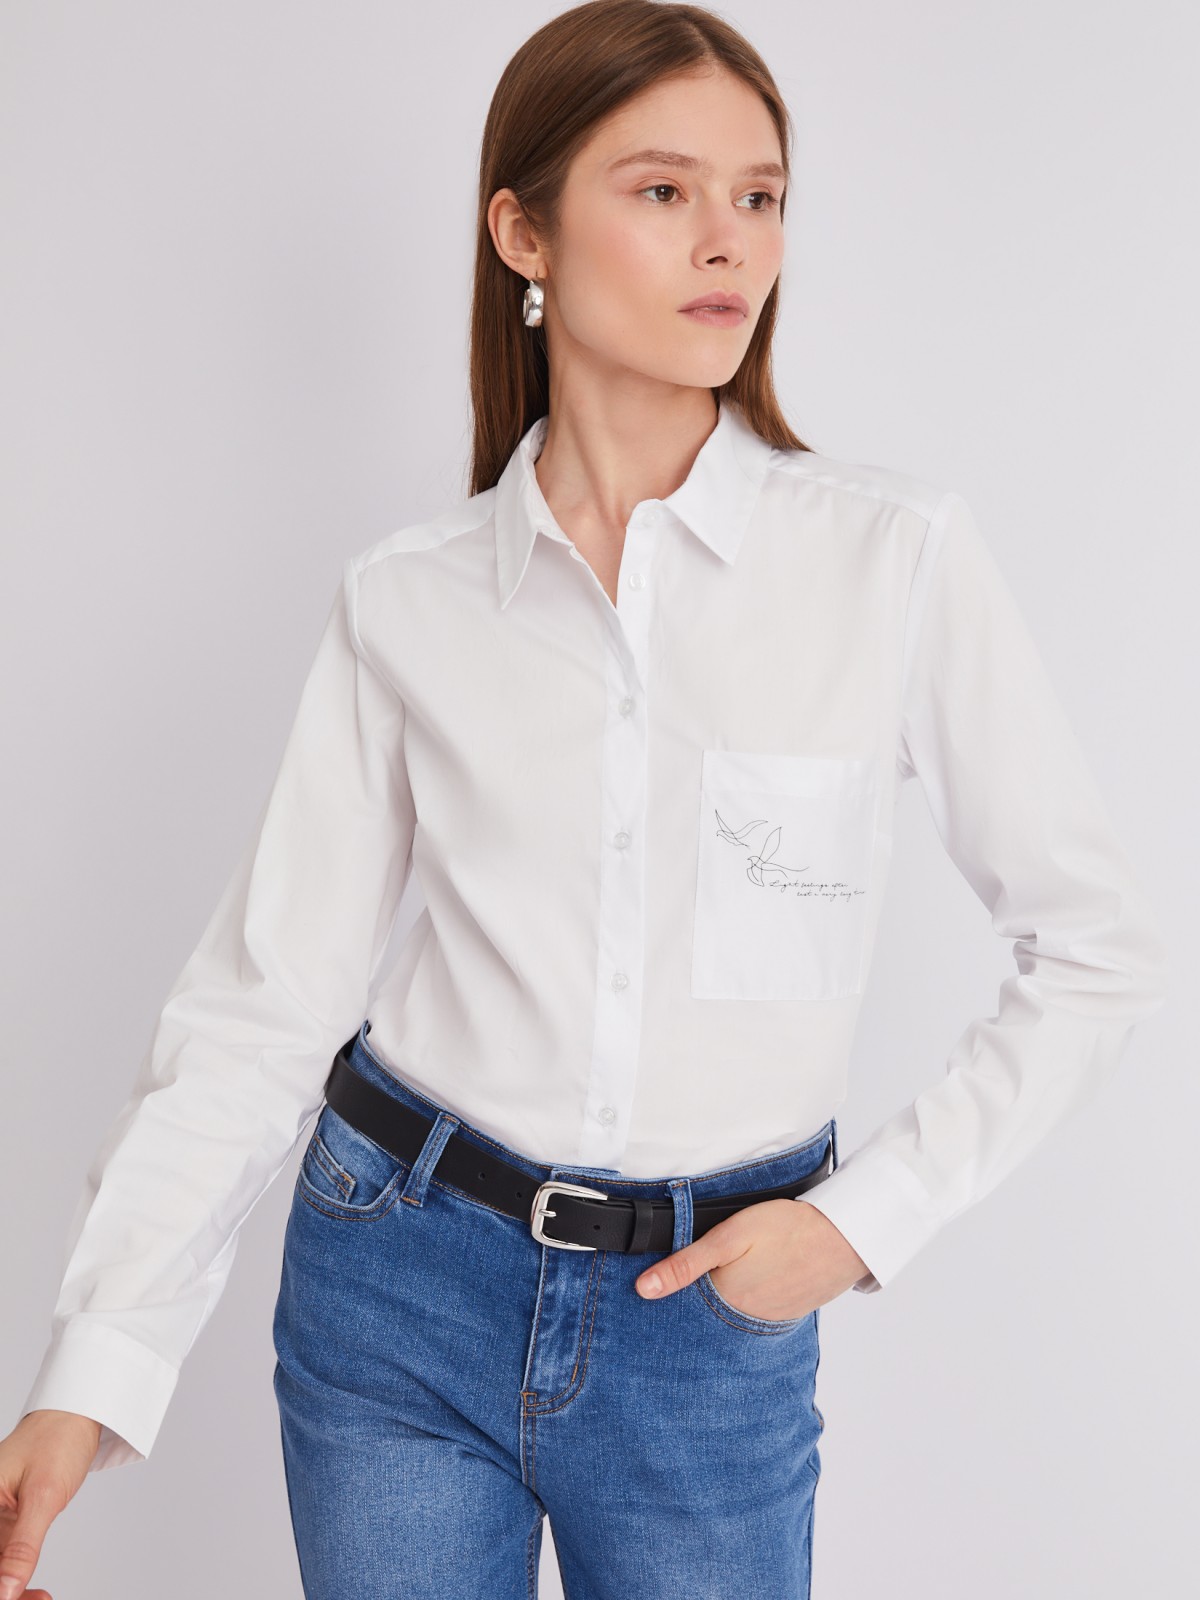 Офисная рубашка прямого силуэта с акцентом на кармане zolla 223311159042, цвет белый, размер S - фото 1